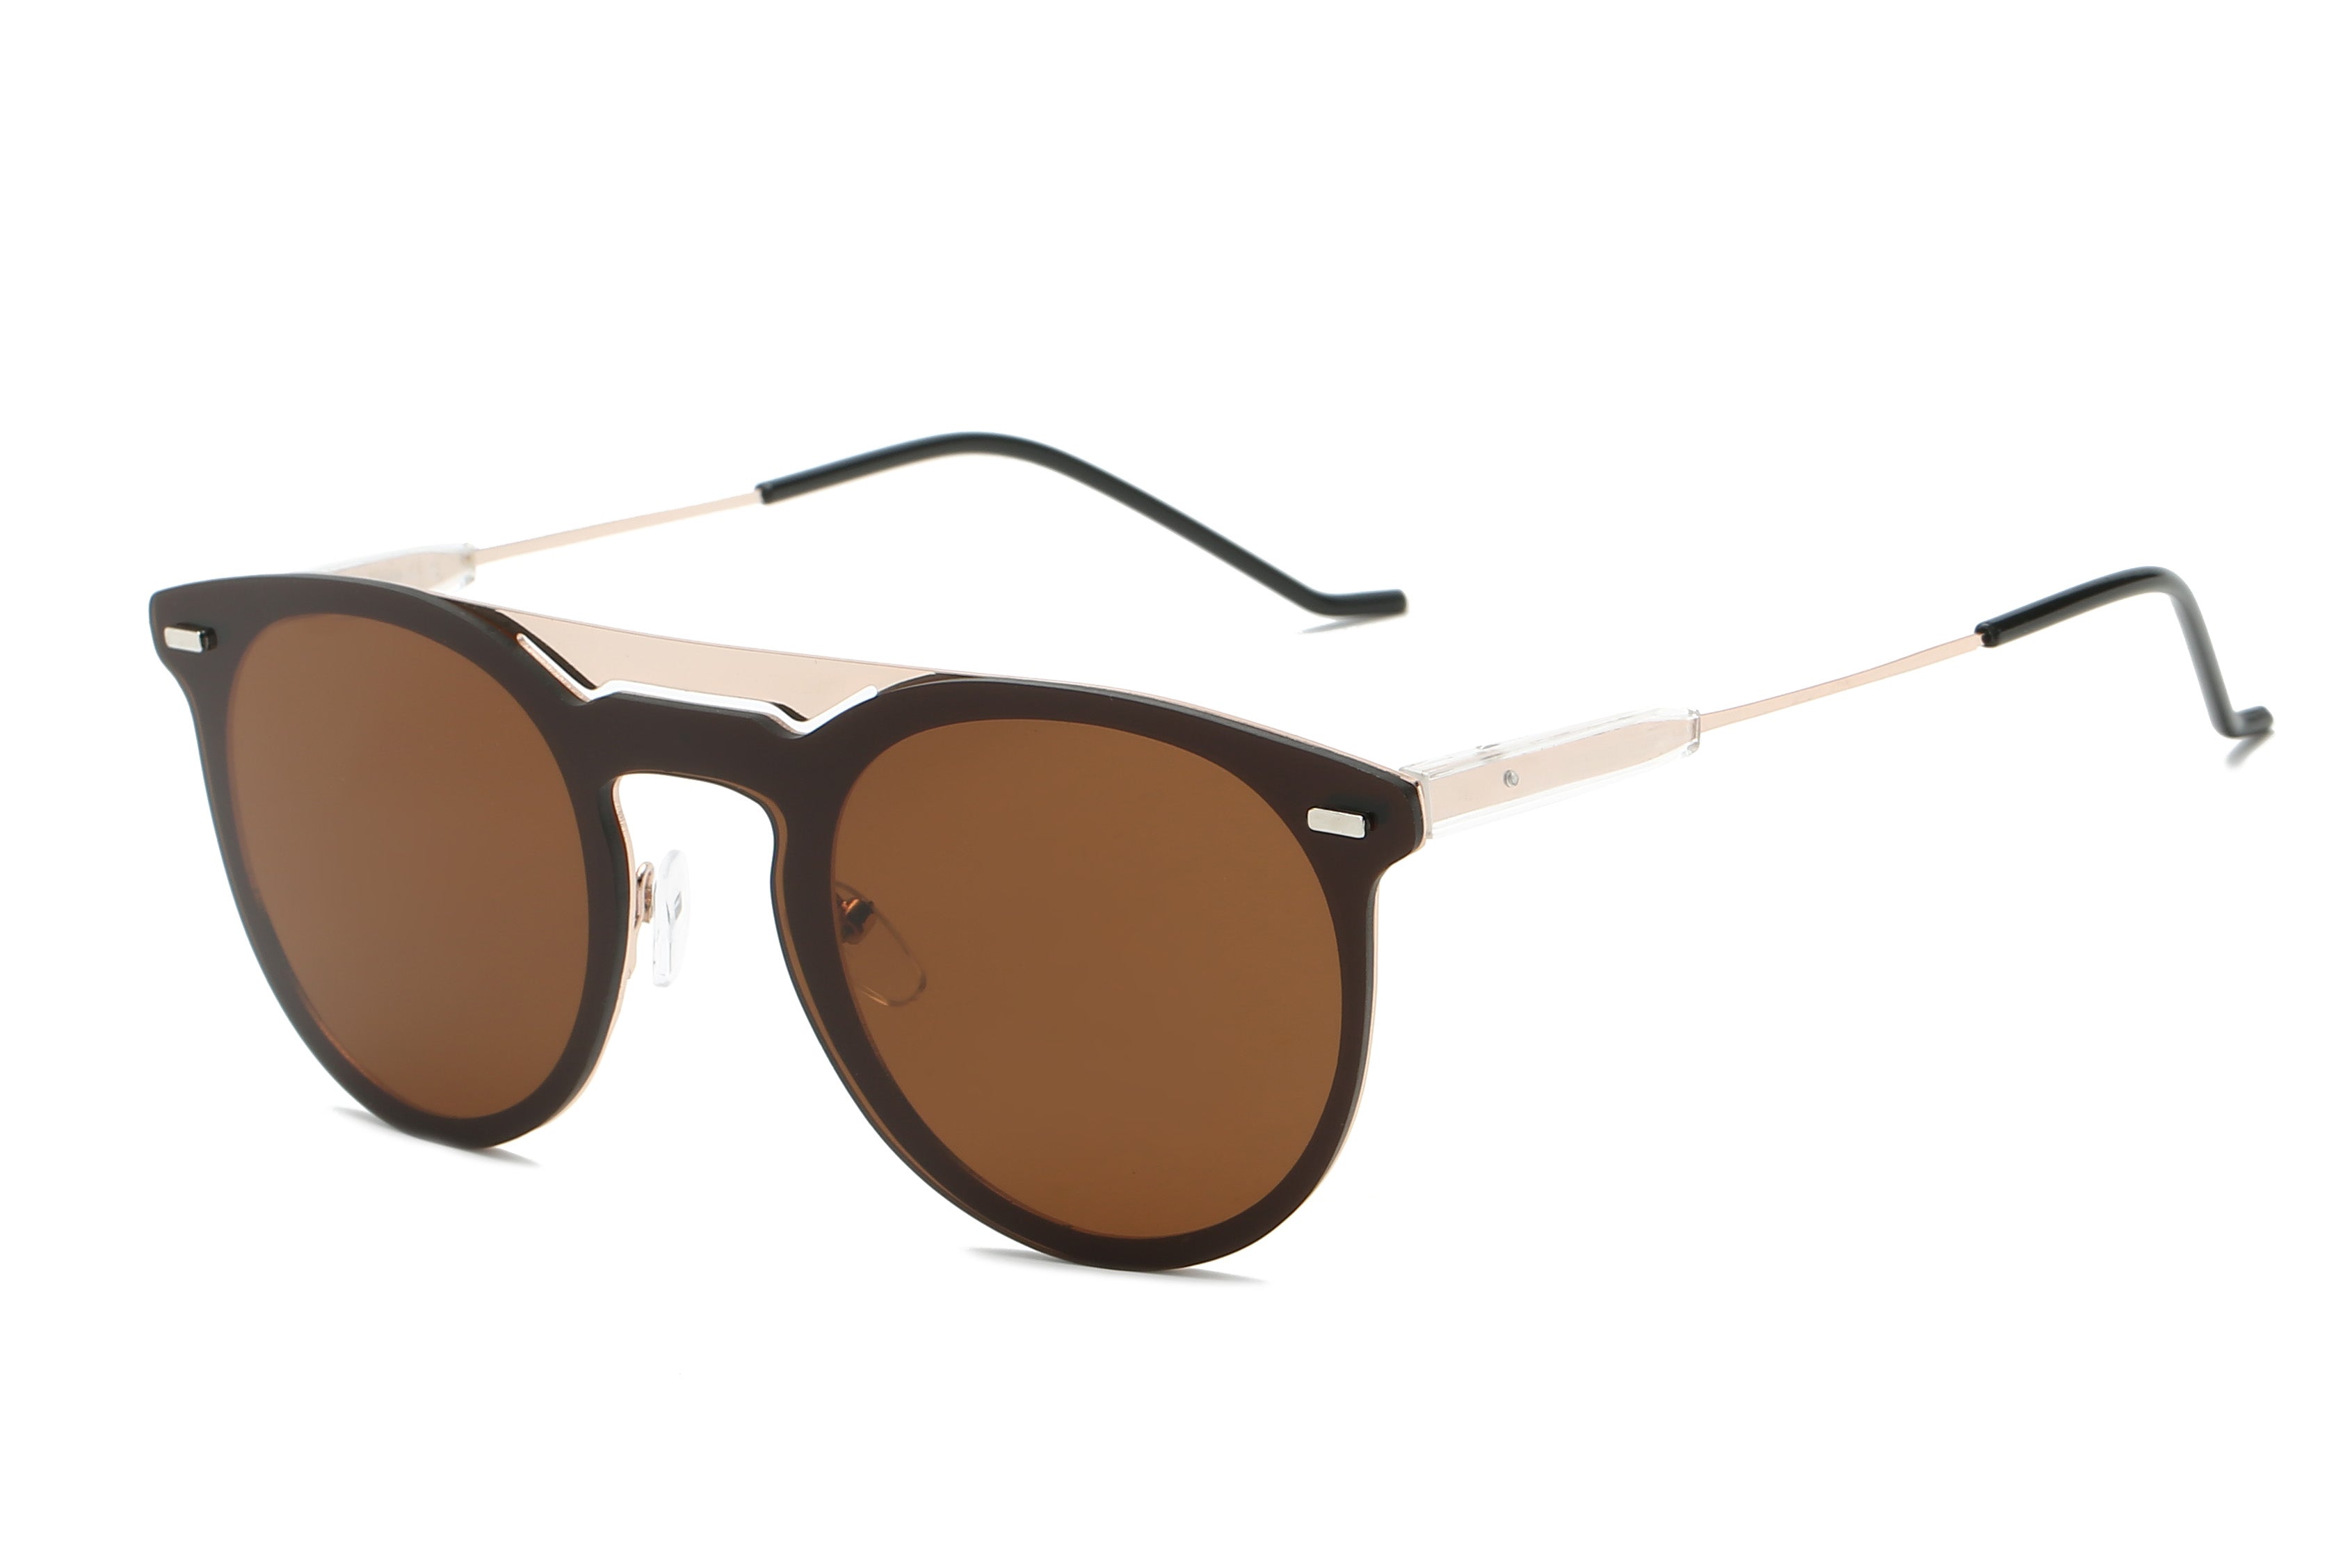 S3010 - Retro Mirrored Circle Round Sunglasses Brown